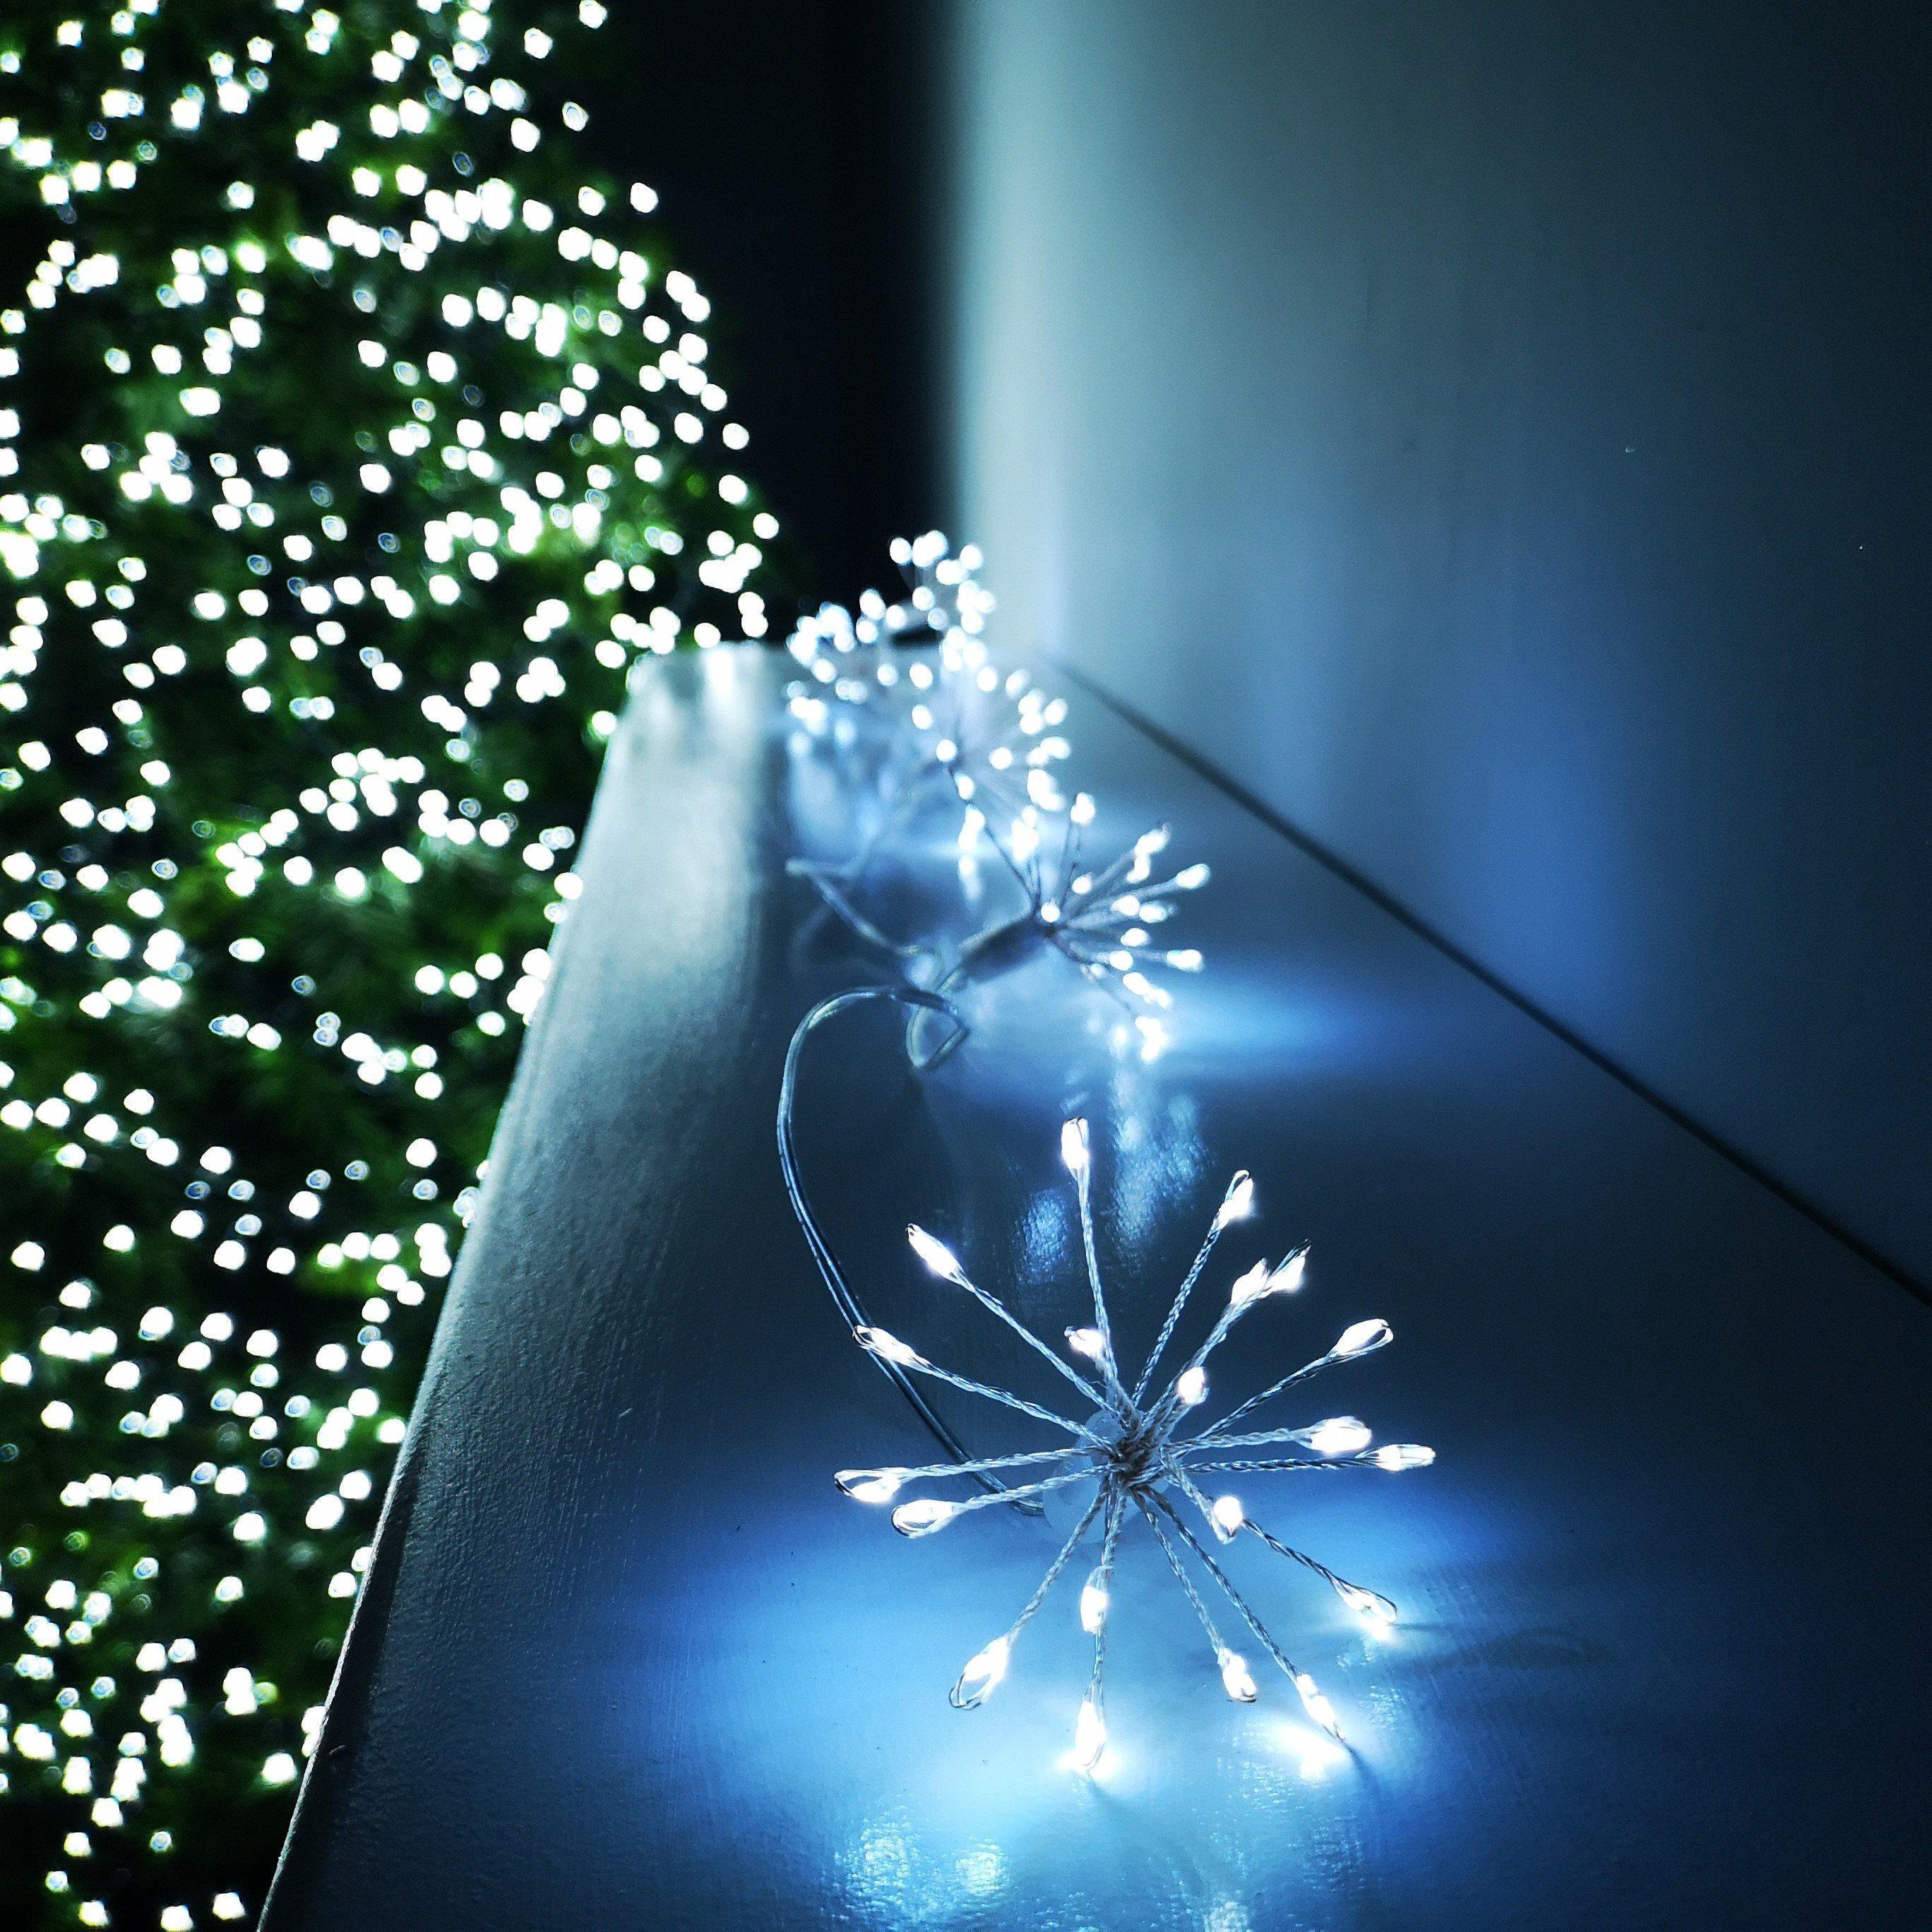 200 LED 10 Starburst Premier Christmas Outdoor Battery Timer Lights in Cool White - image 1